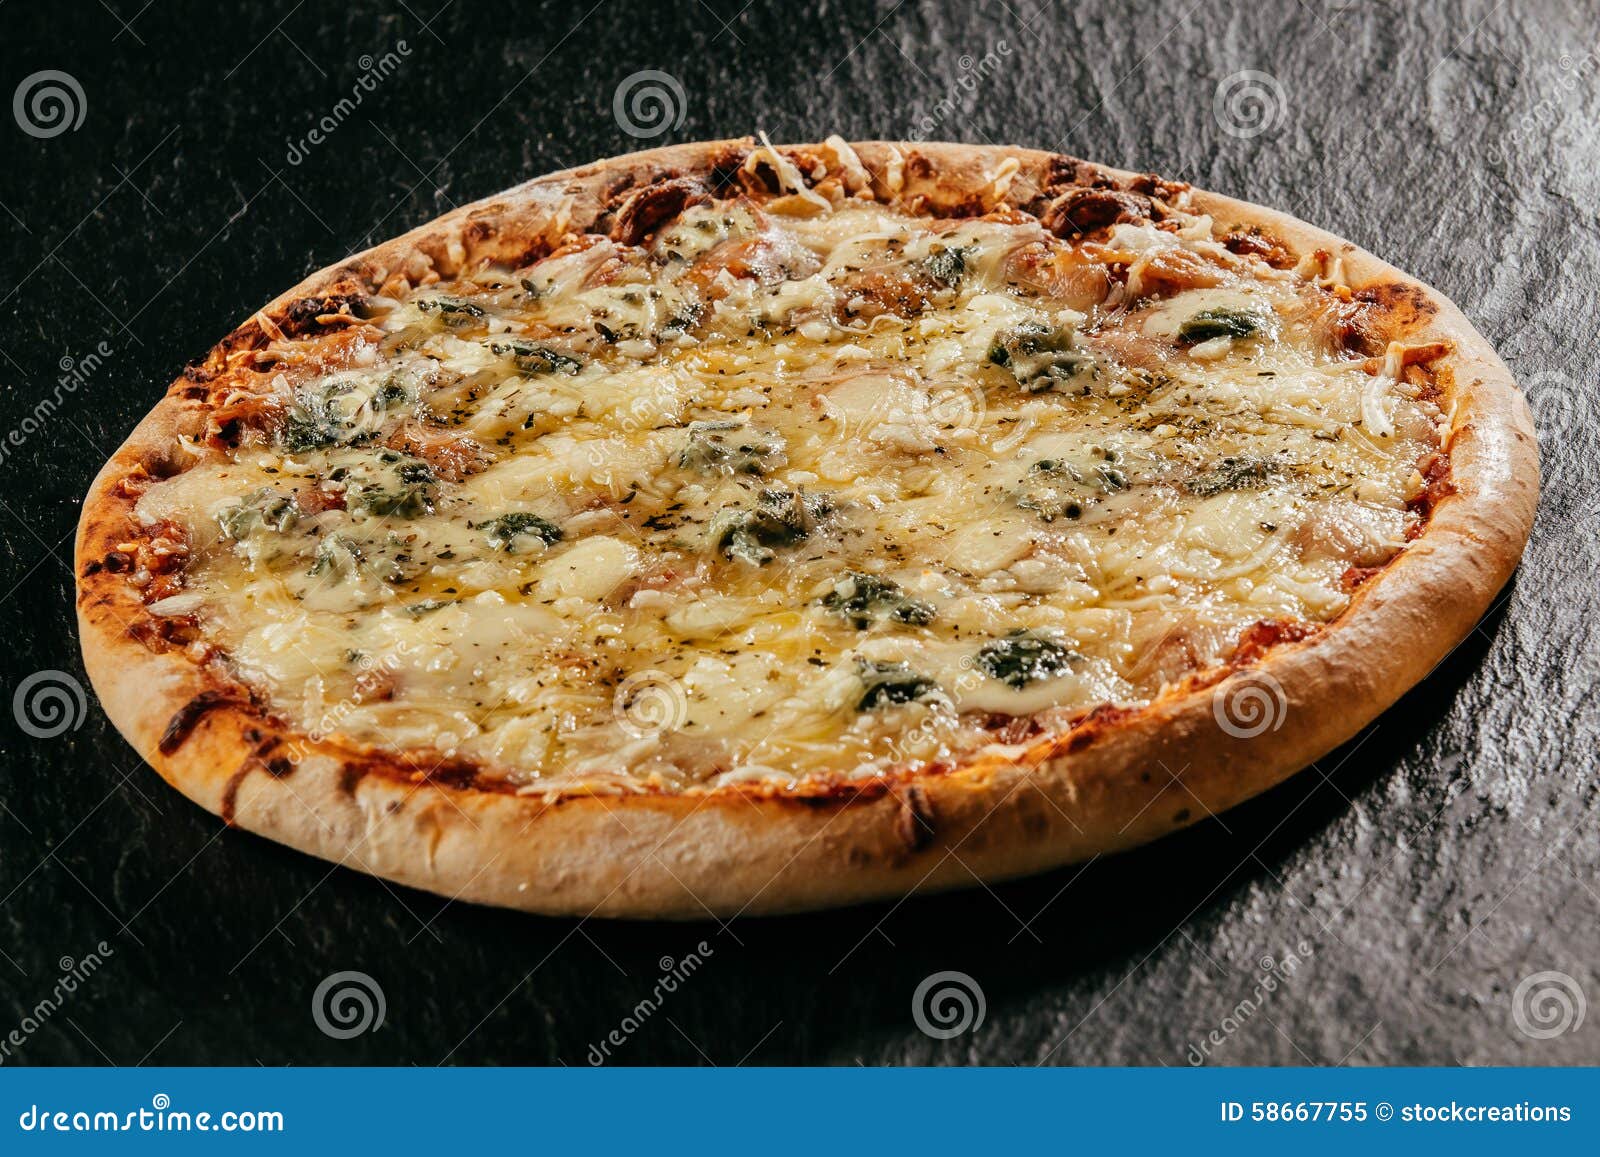 пицца la trattoria четыре сыра фото 66